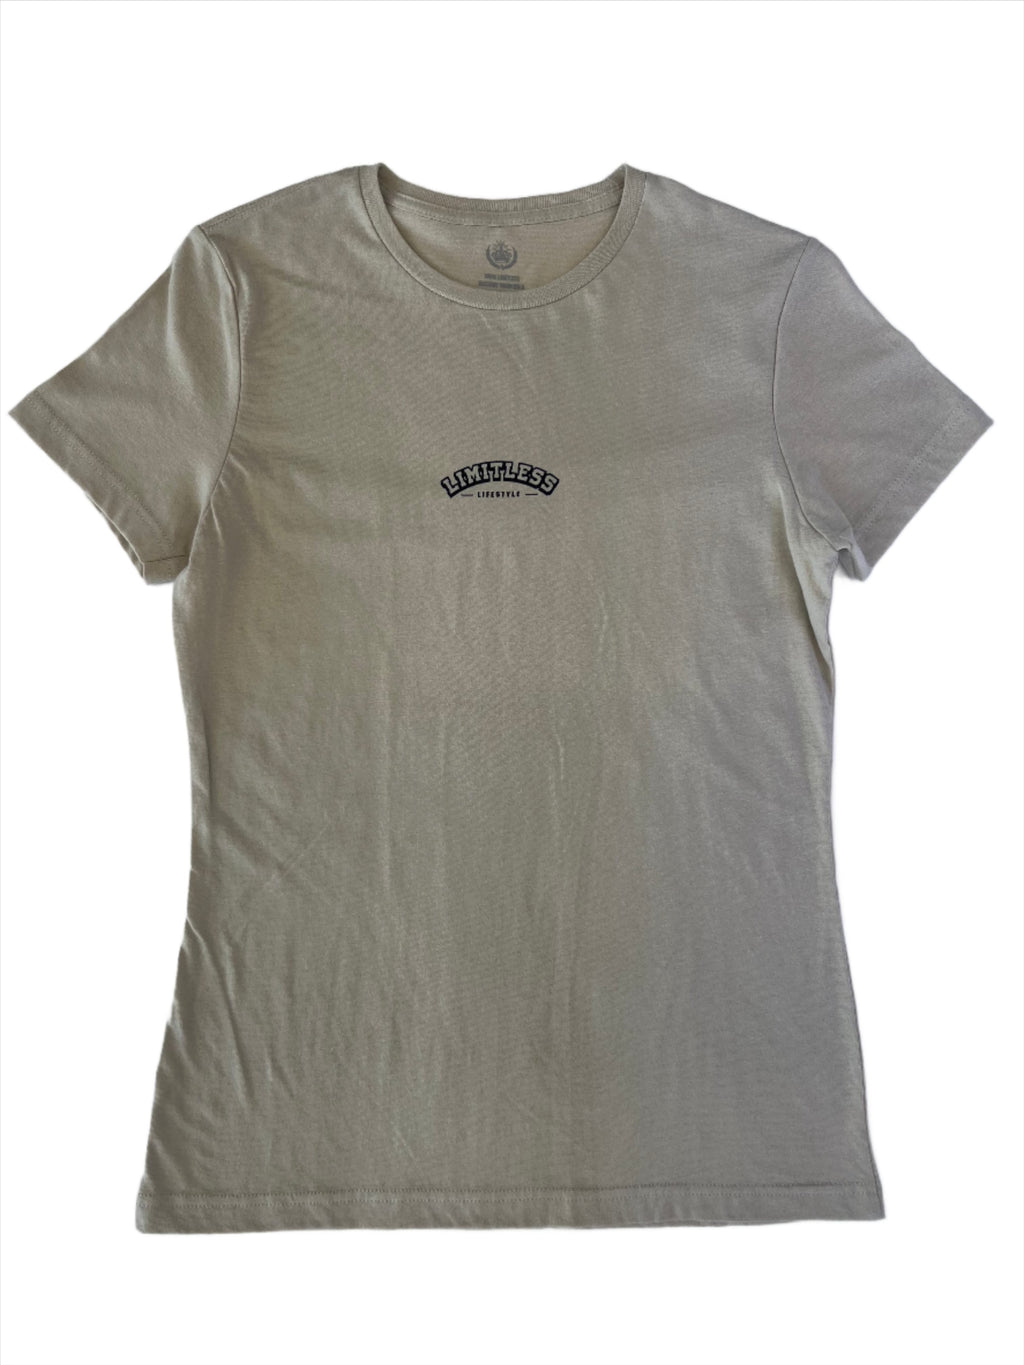 Limitless "Micro Jorge P" Womens T-shirt (Beige)